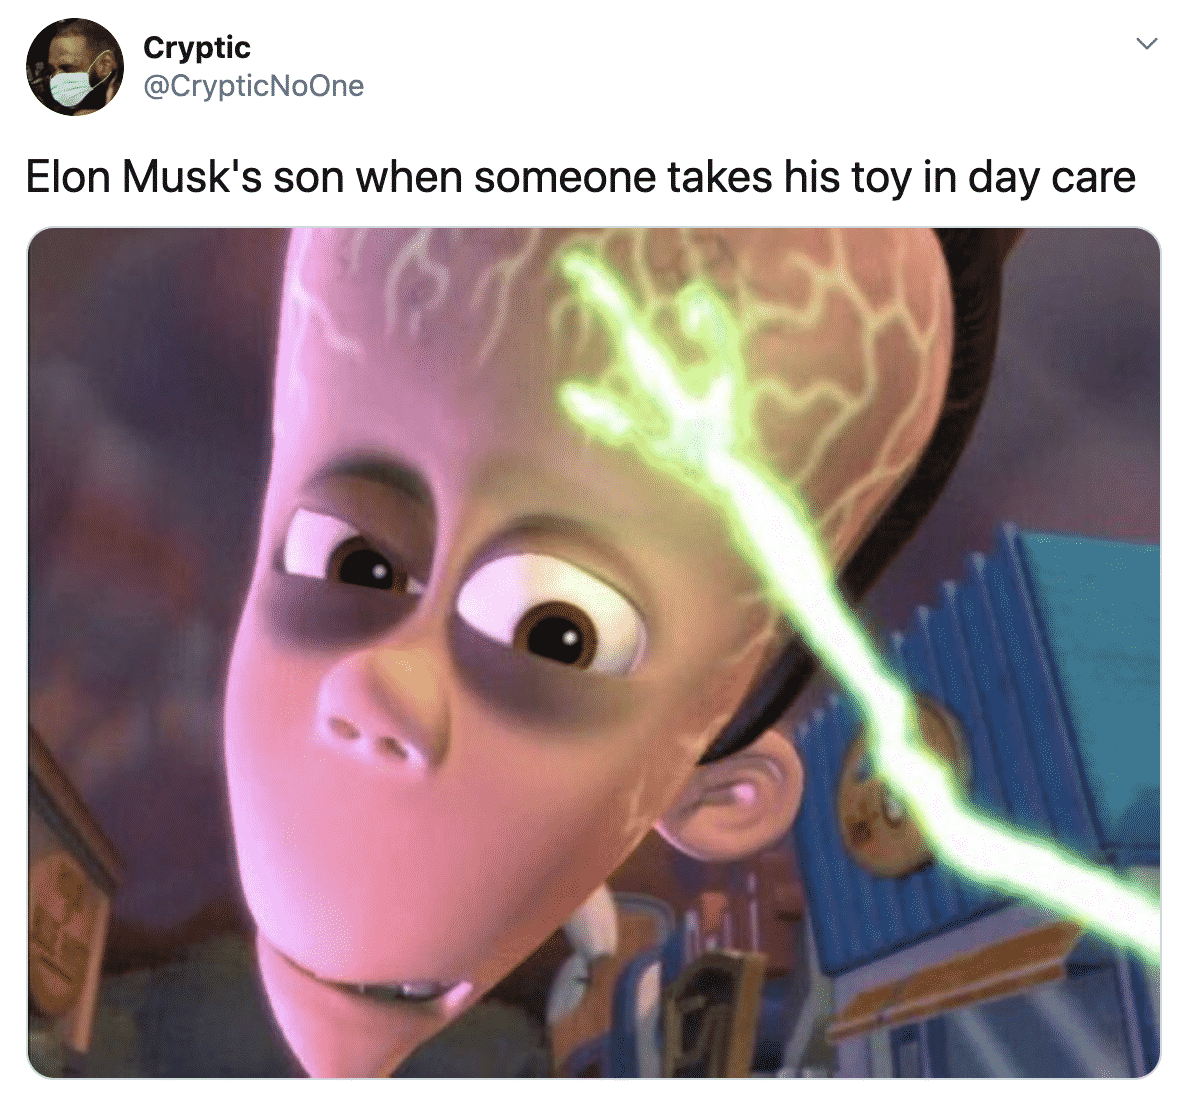 Elon Musk memes, Elon Musk baby name memes, Elon Musk baby name meme, Elon Musk meme, funniest Elon Musk baby memes, best Elon musk baby memes, Elon Musk baby meme, Elon Musk baby memes, Elon Musk Grimes baby meme, Elon Musk Grimes baby memes